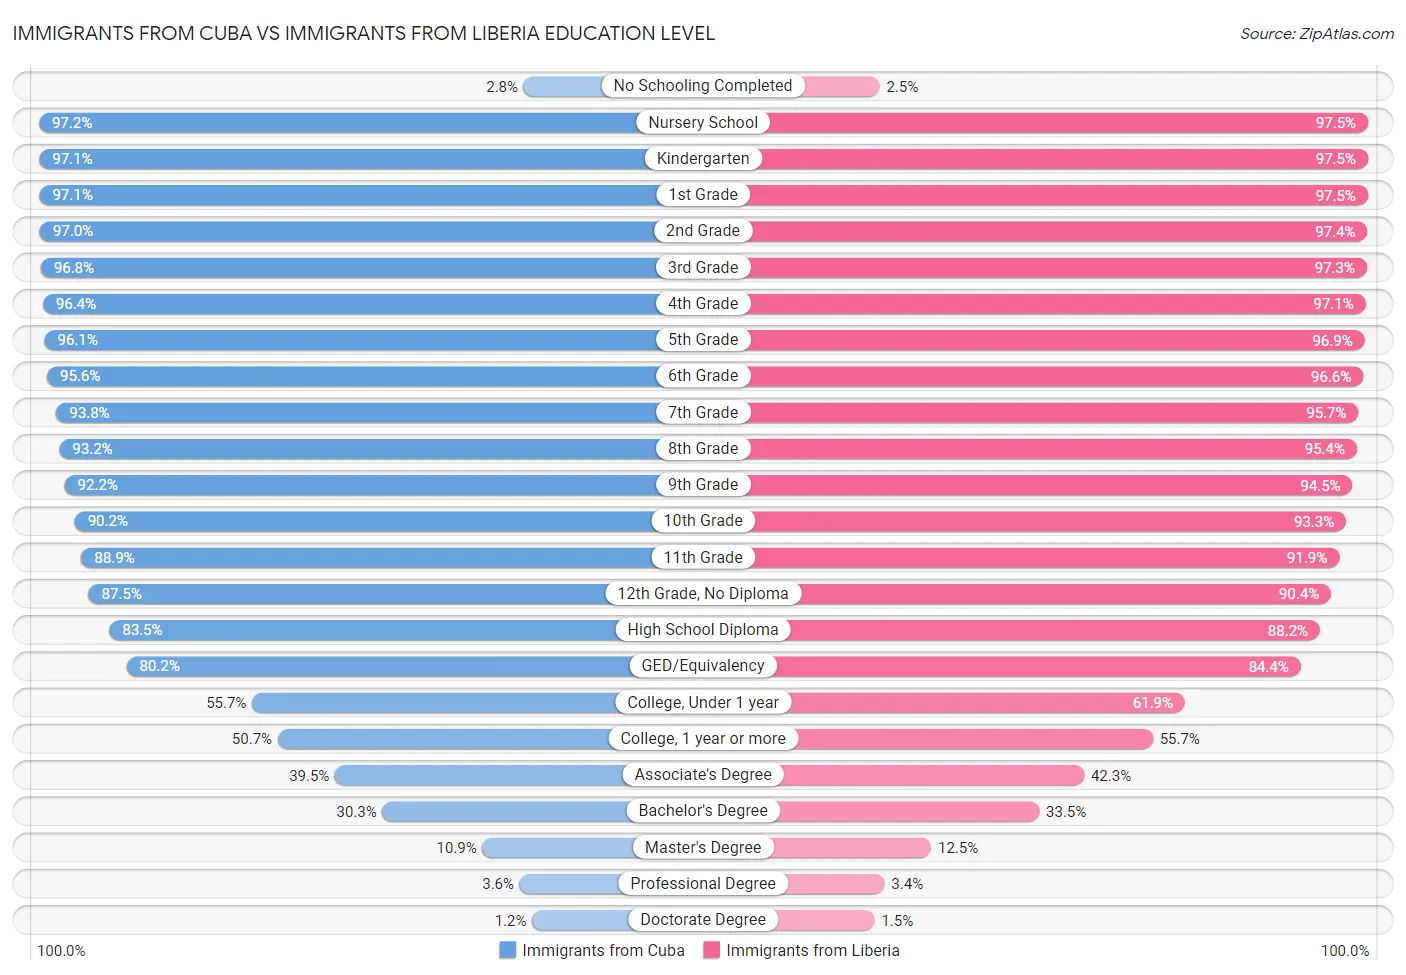 Immigrants from Cuba vs Immigrants from Liberia Education Level